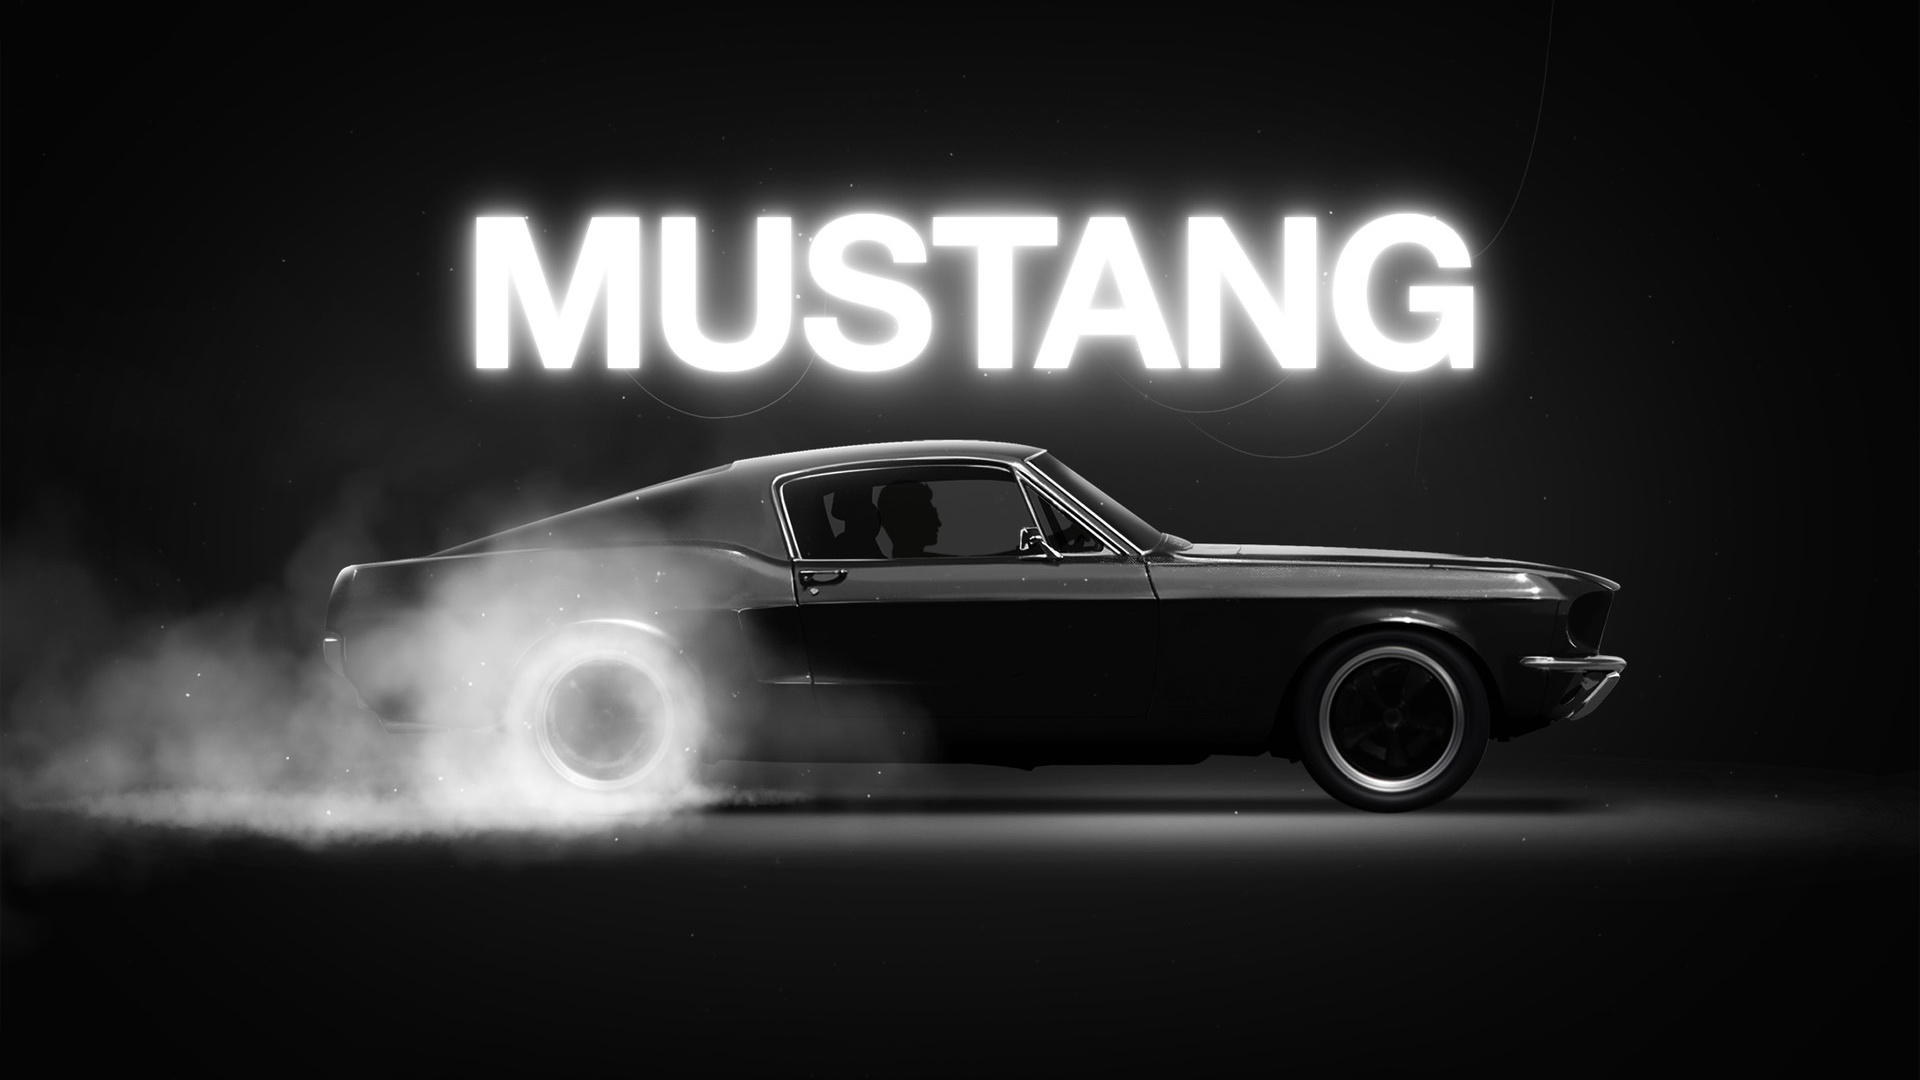 Ford Mustang Monochrome Smoke 1920x1080